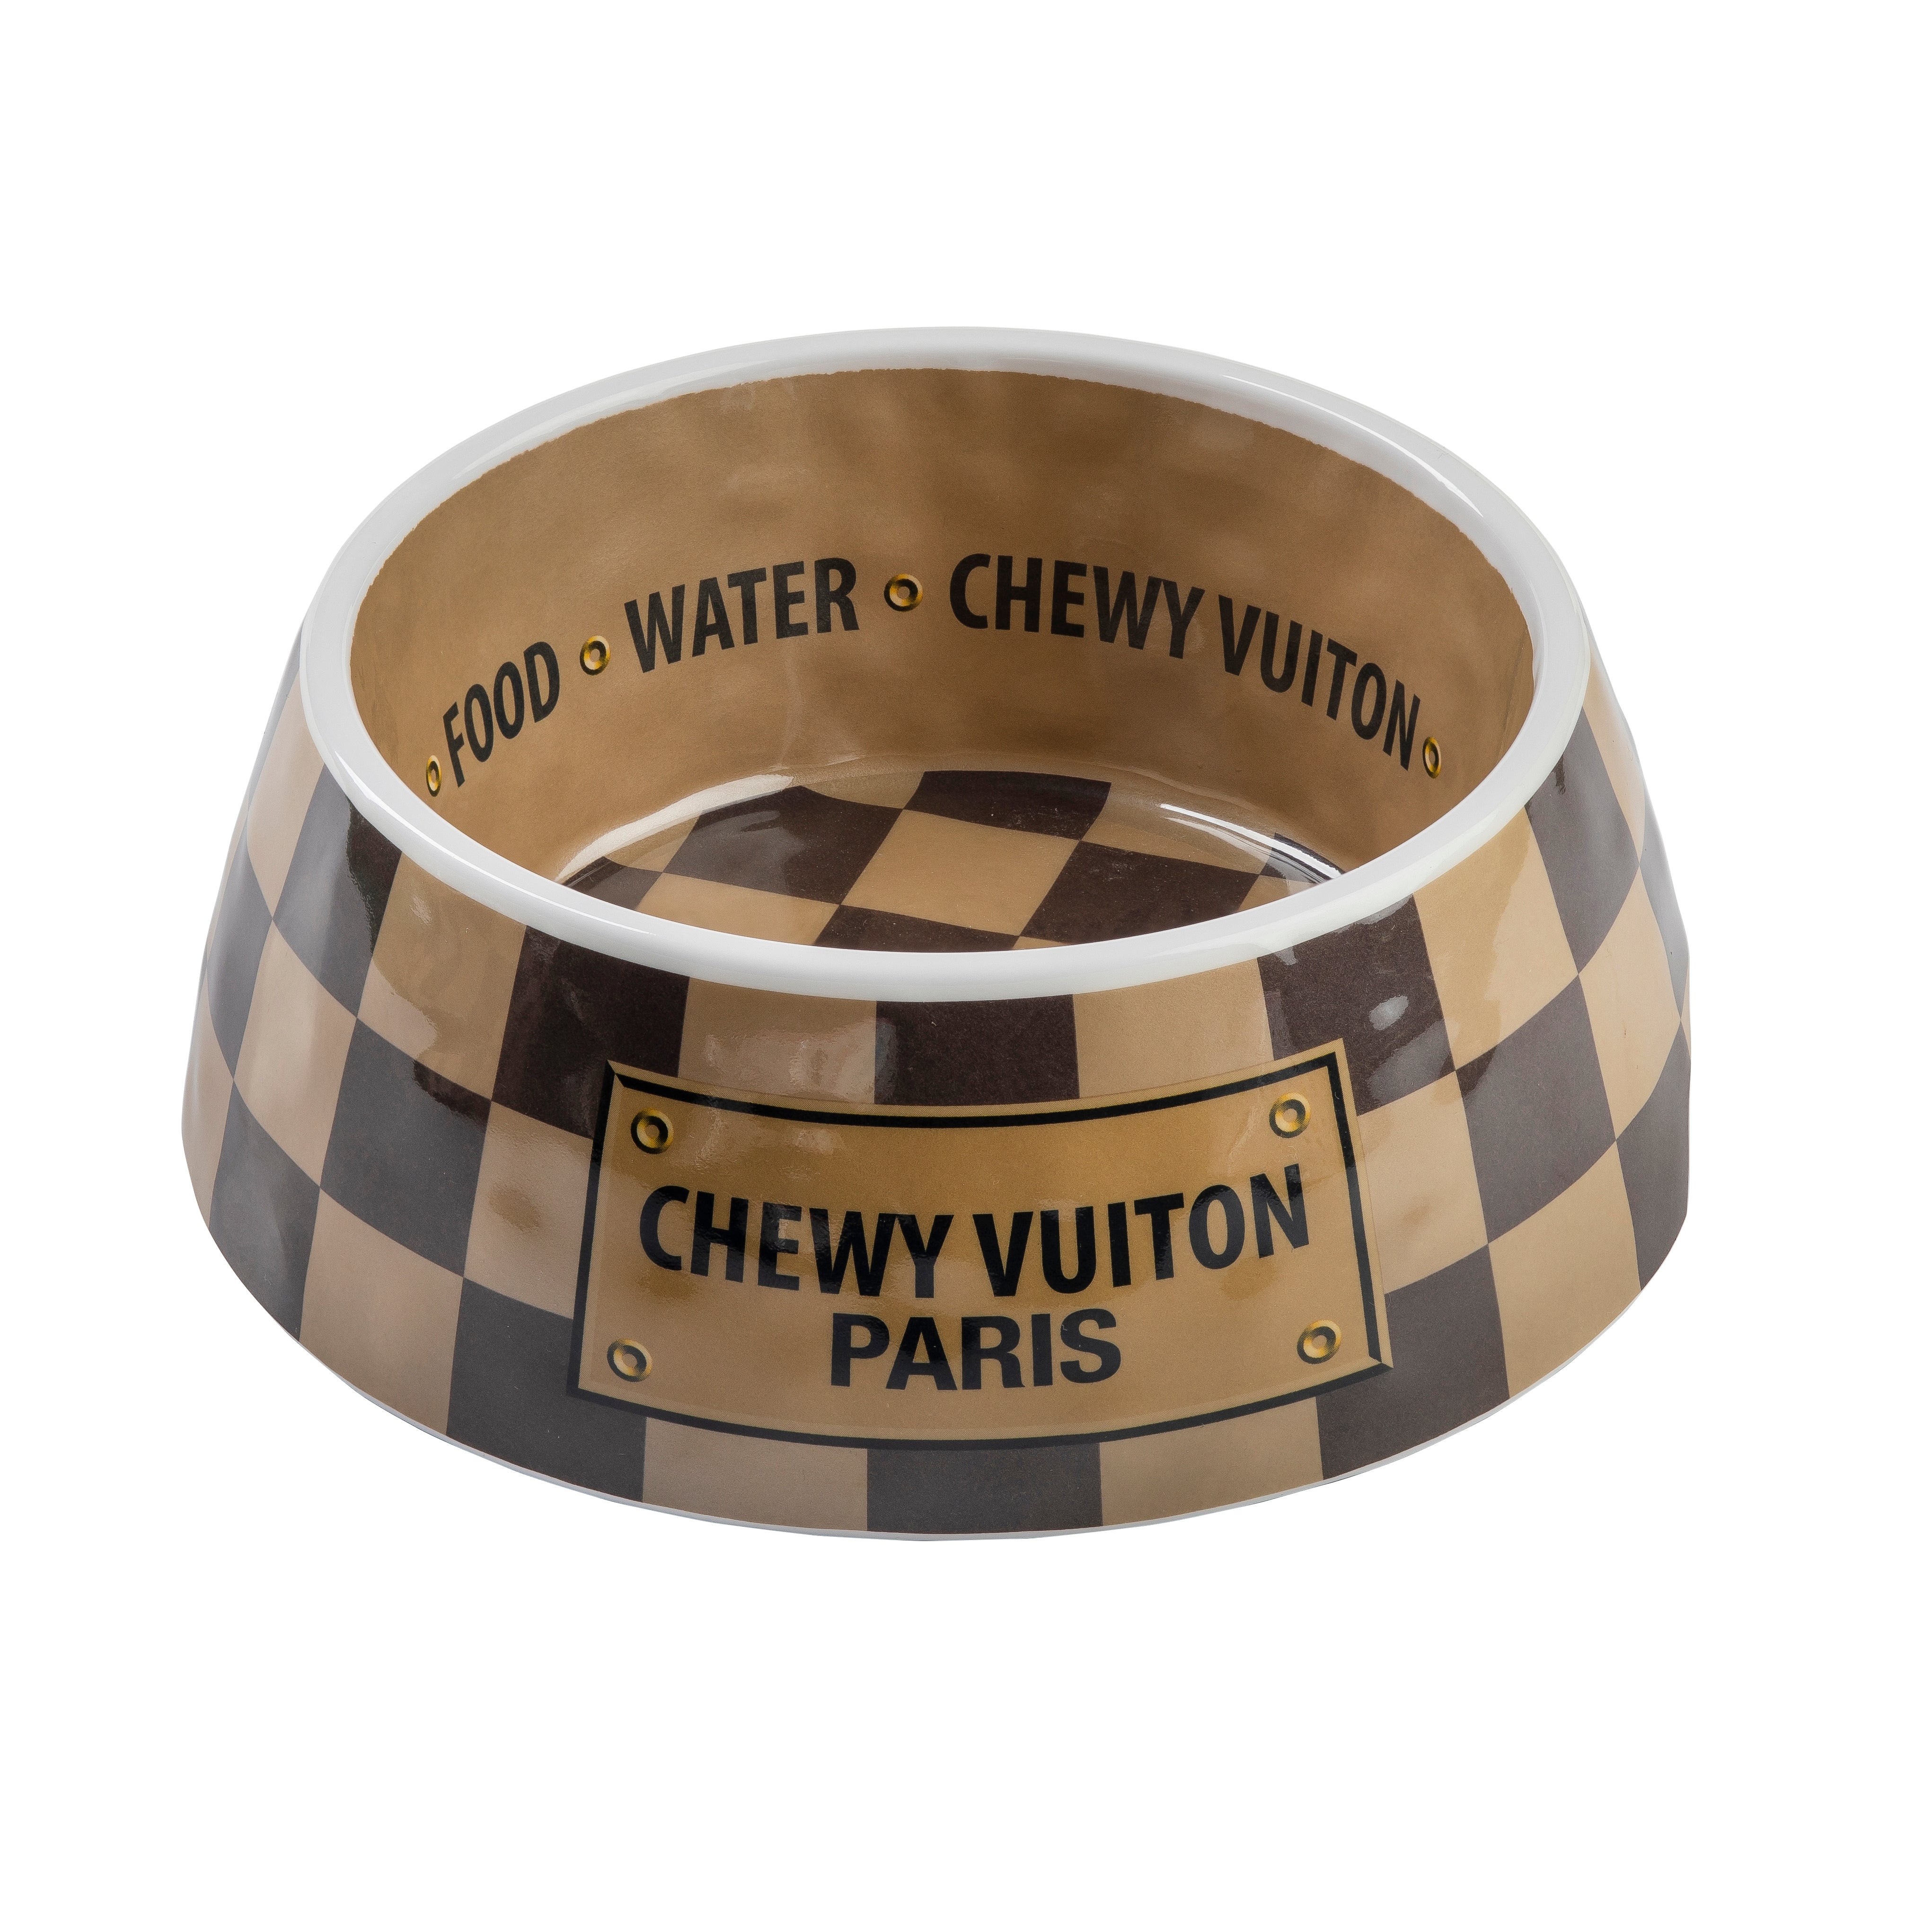 Chewy Vuitton Damier Feeding Bowl